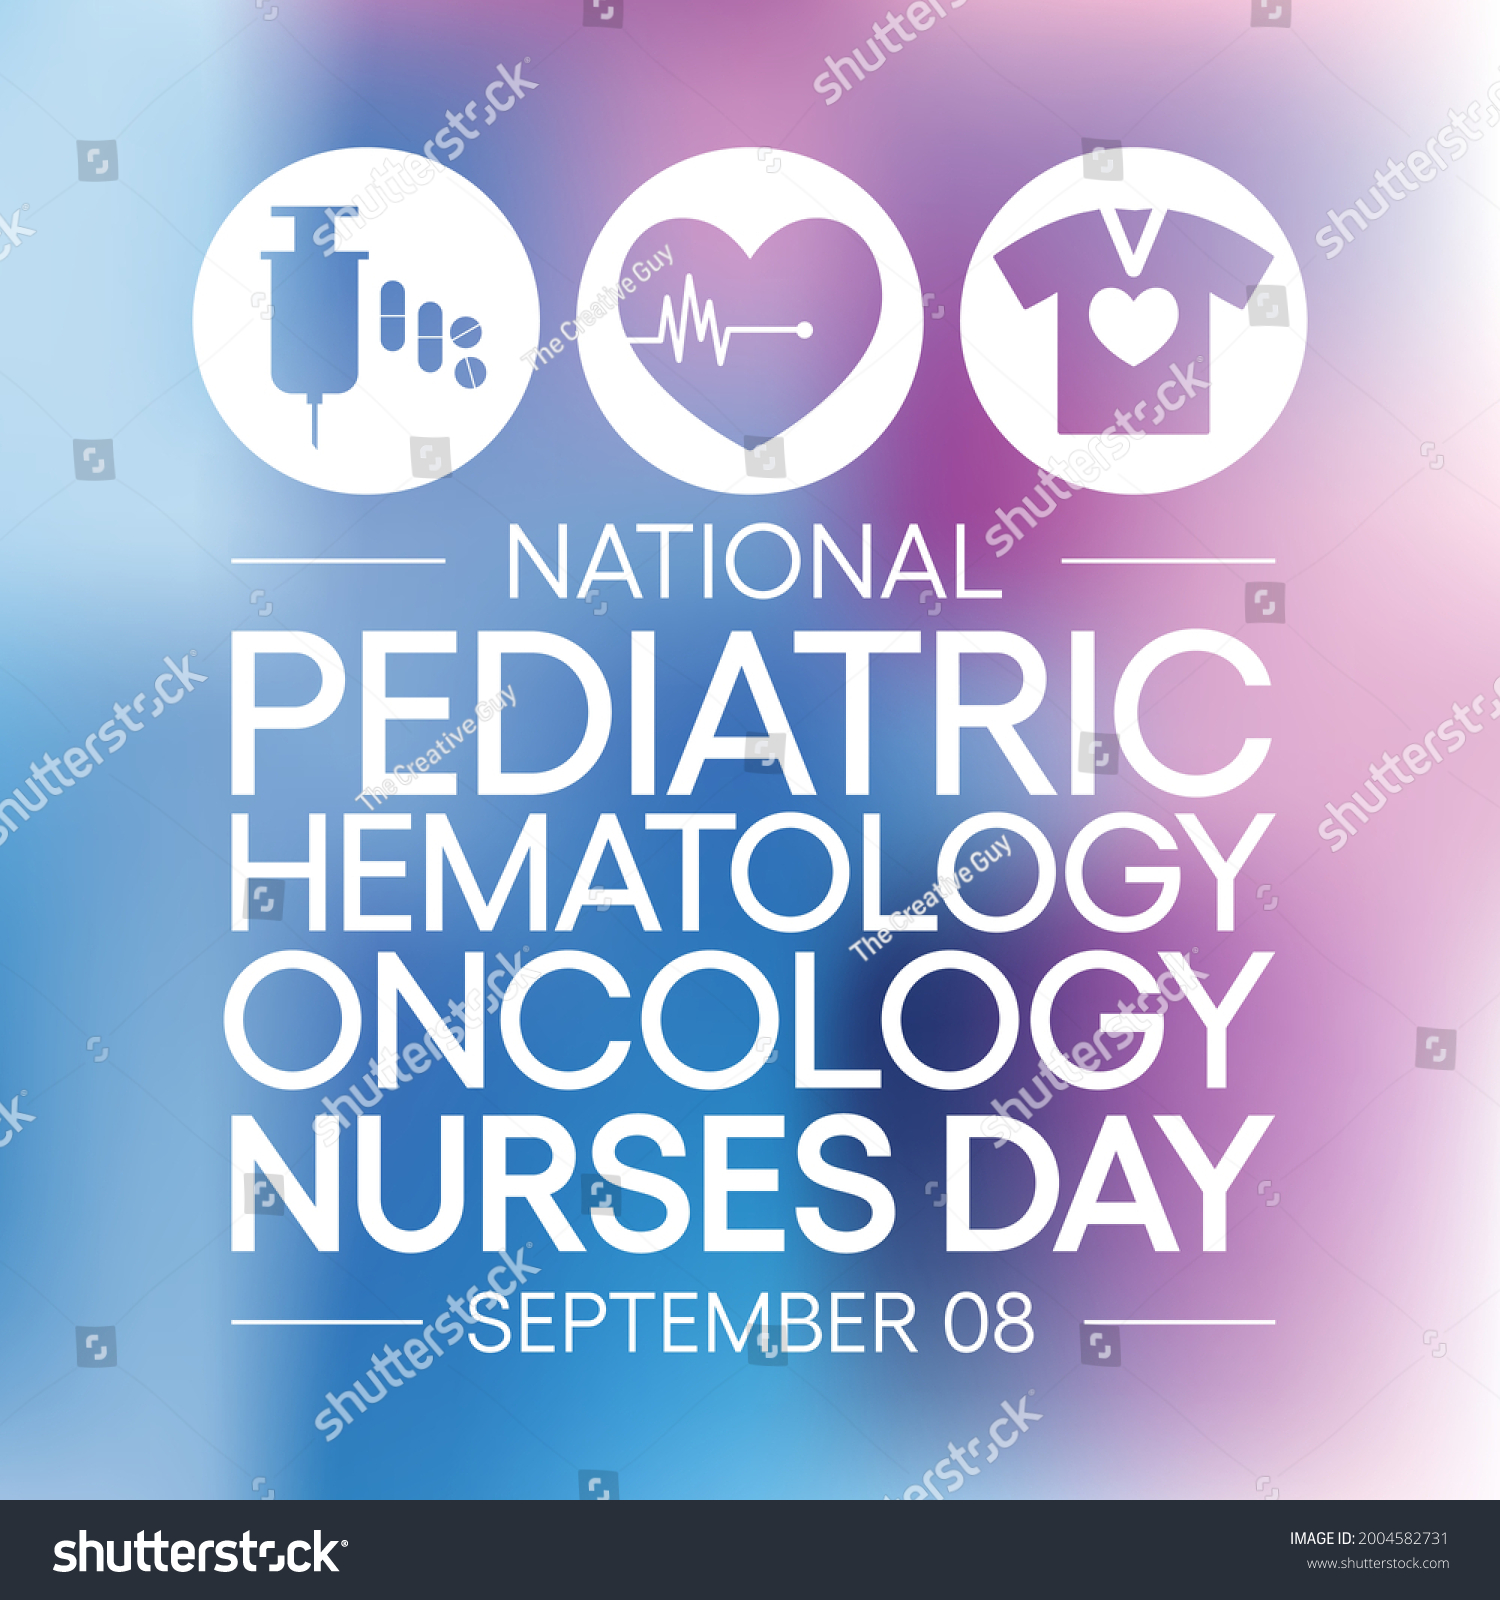 List 96+ Images national pediatric hematology/oncology nurses day Full HD, 2k, 4k